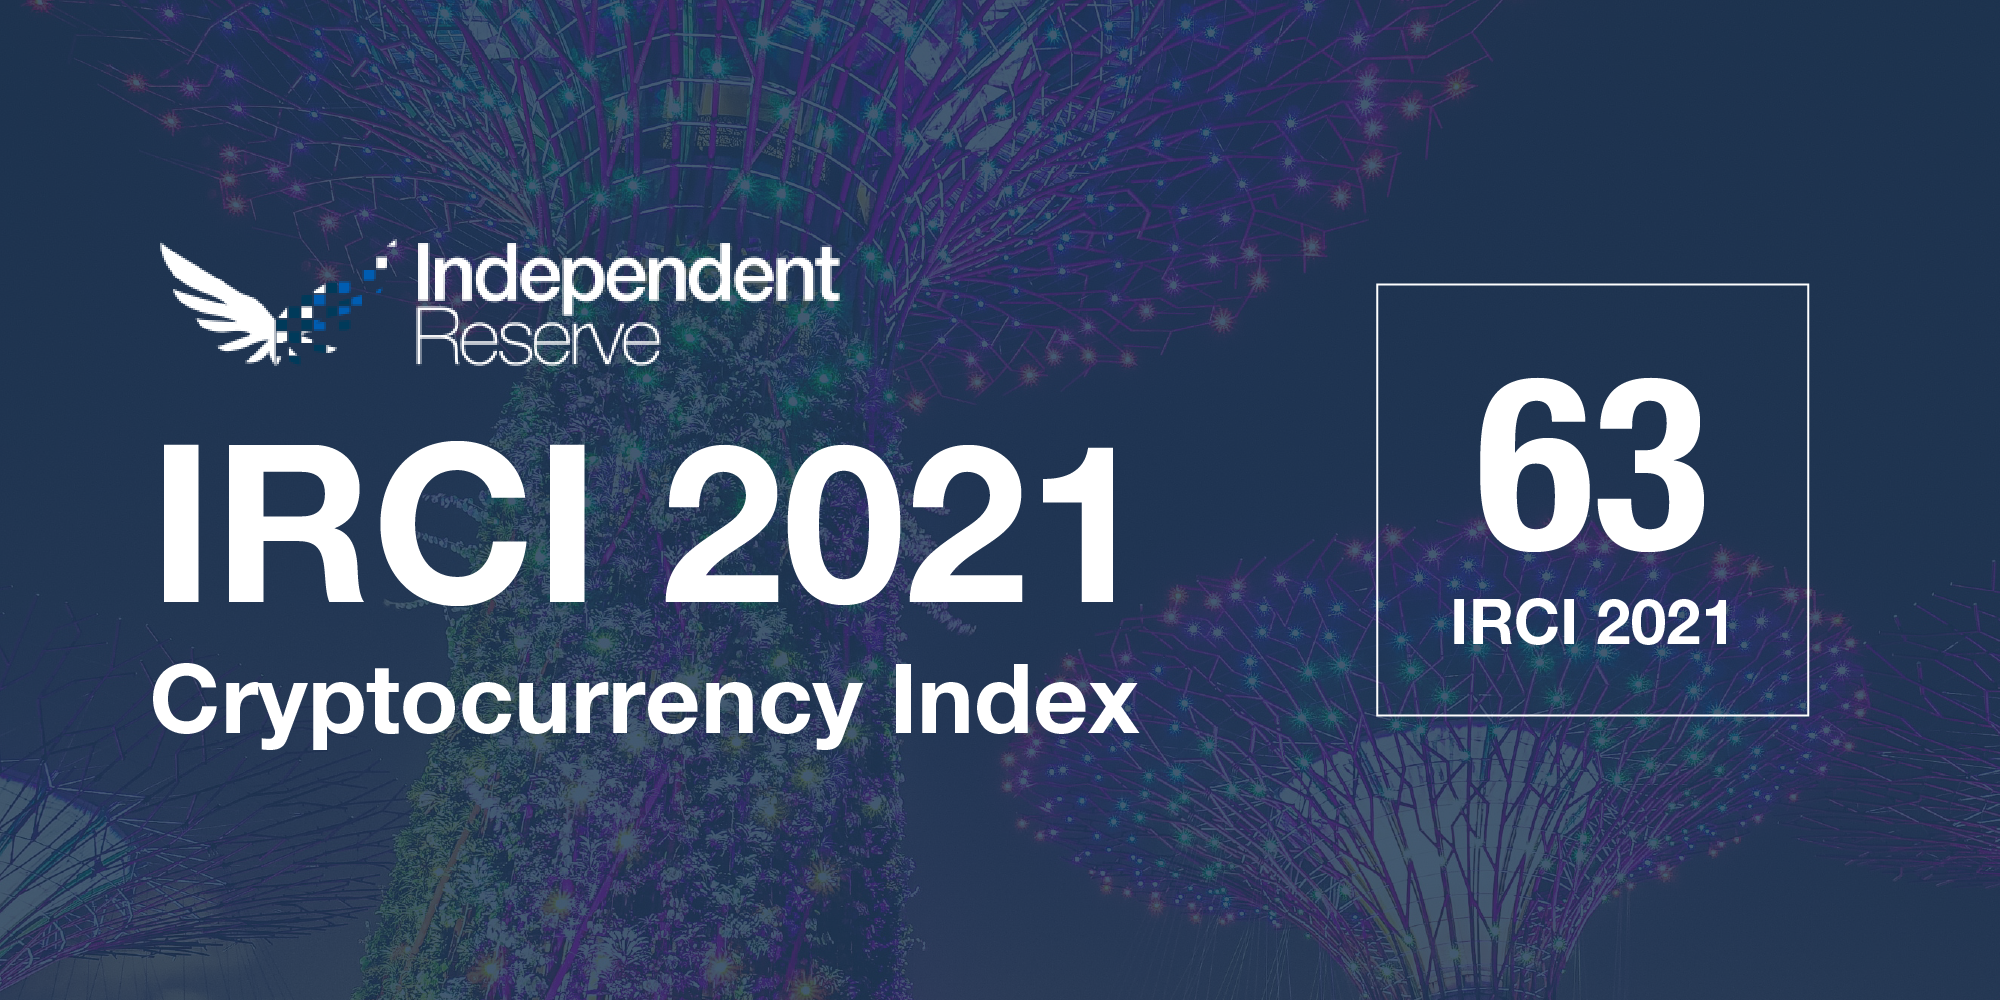 Independent Reserve Cryptocurrency Index (IRCI) Singapore 2021